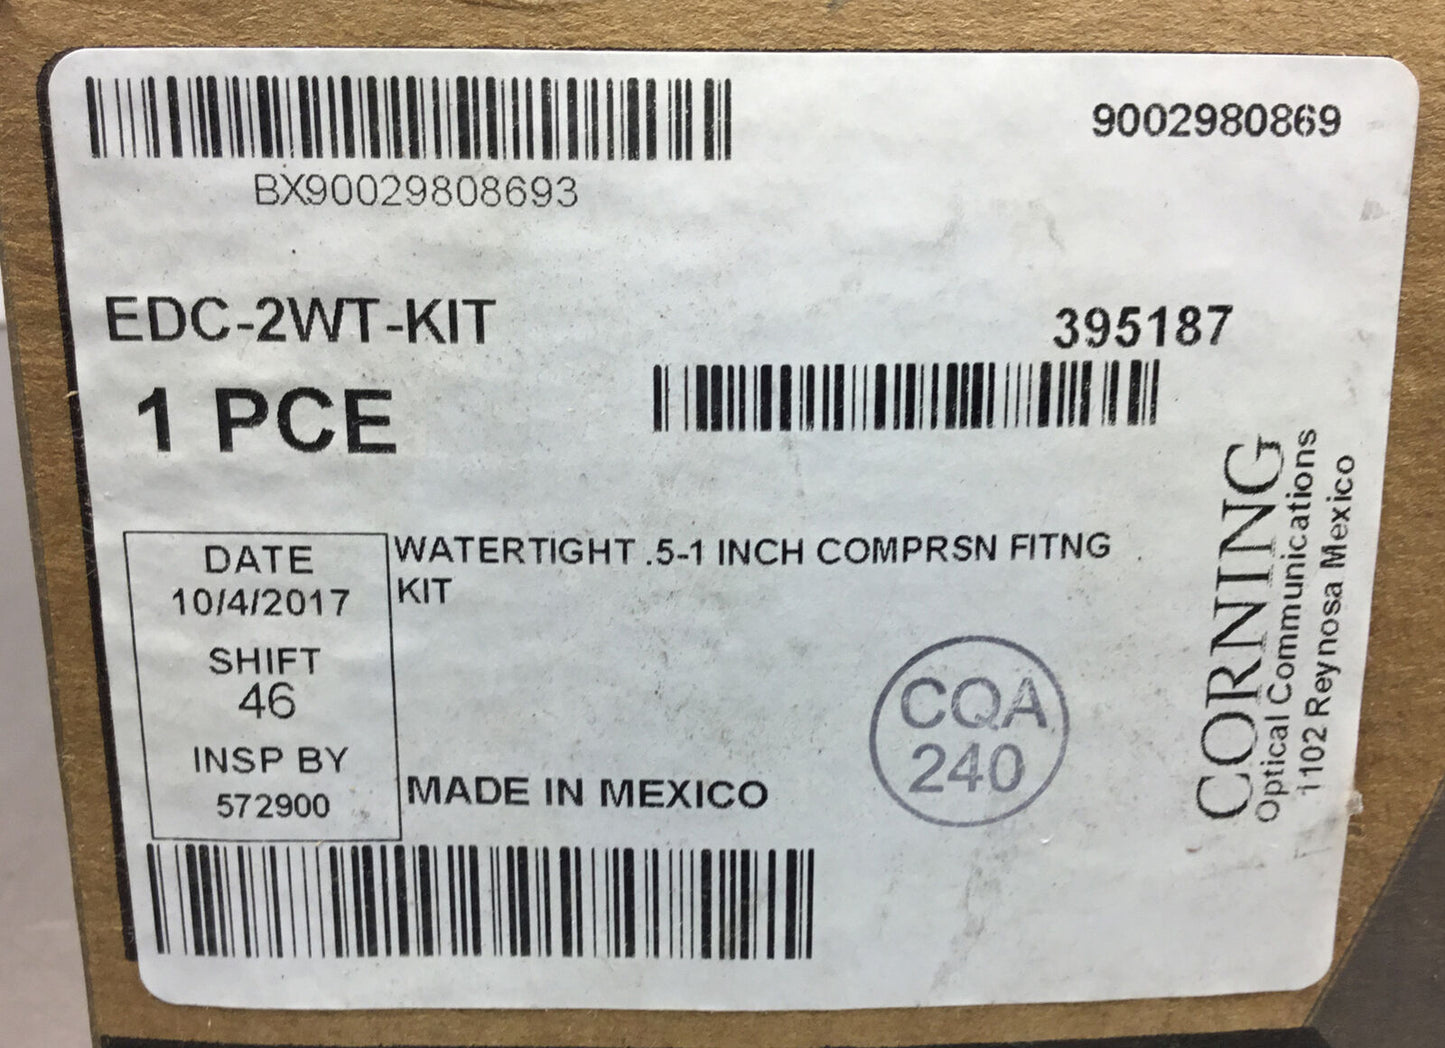 Corning EDC-2WT-KIT Watertight Compression Fitting Kit   6B